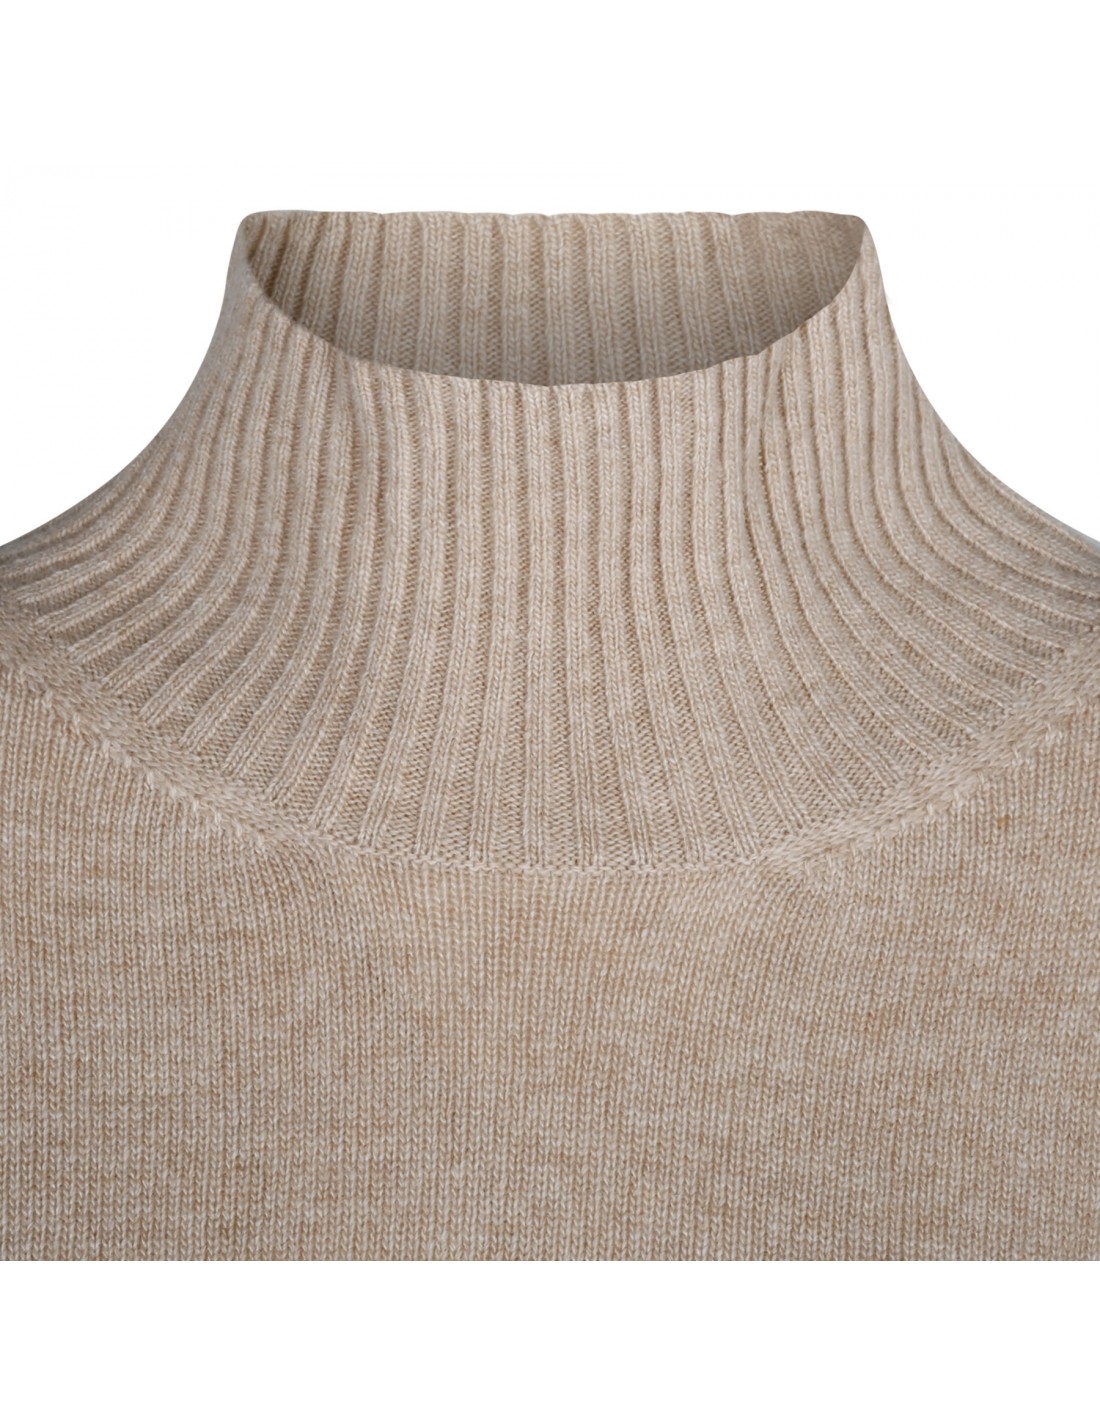 Light beige merino and cashmere blend sweater